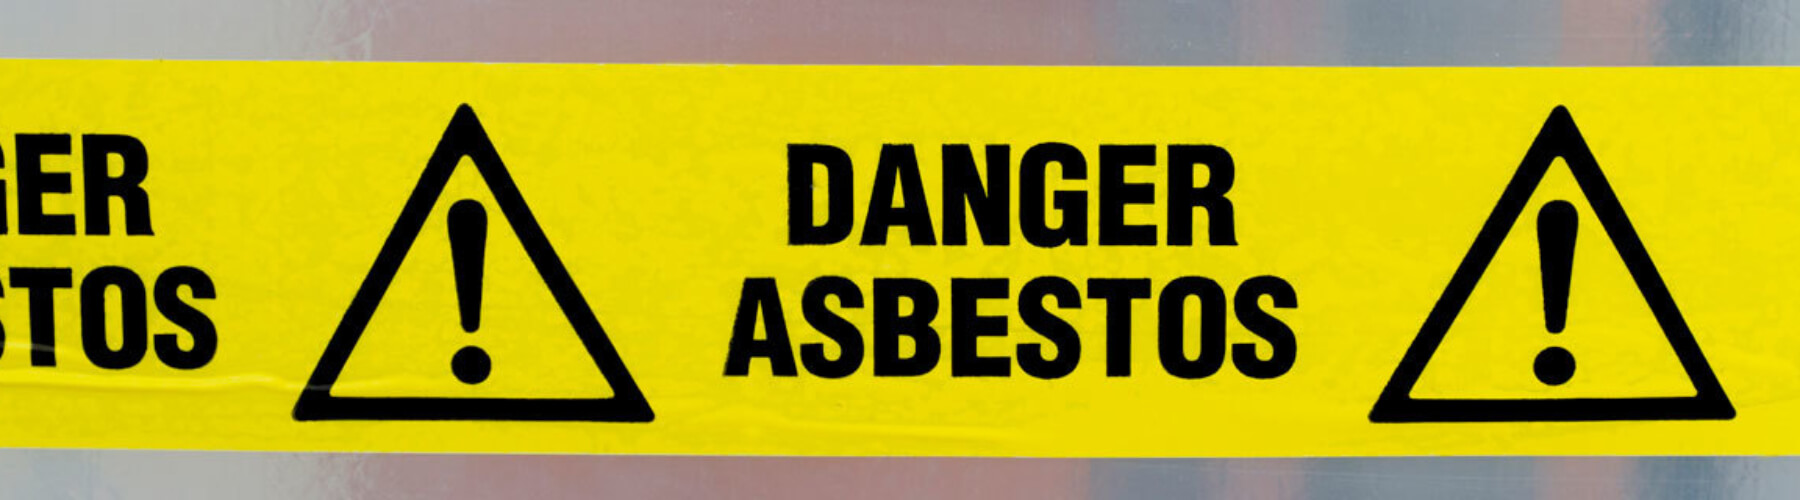 Asbestos warning sign, danger asbestos